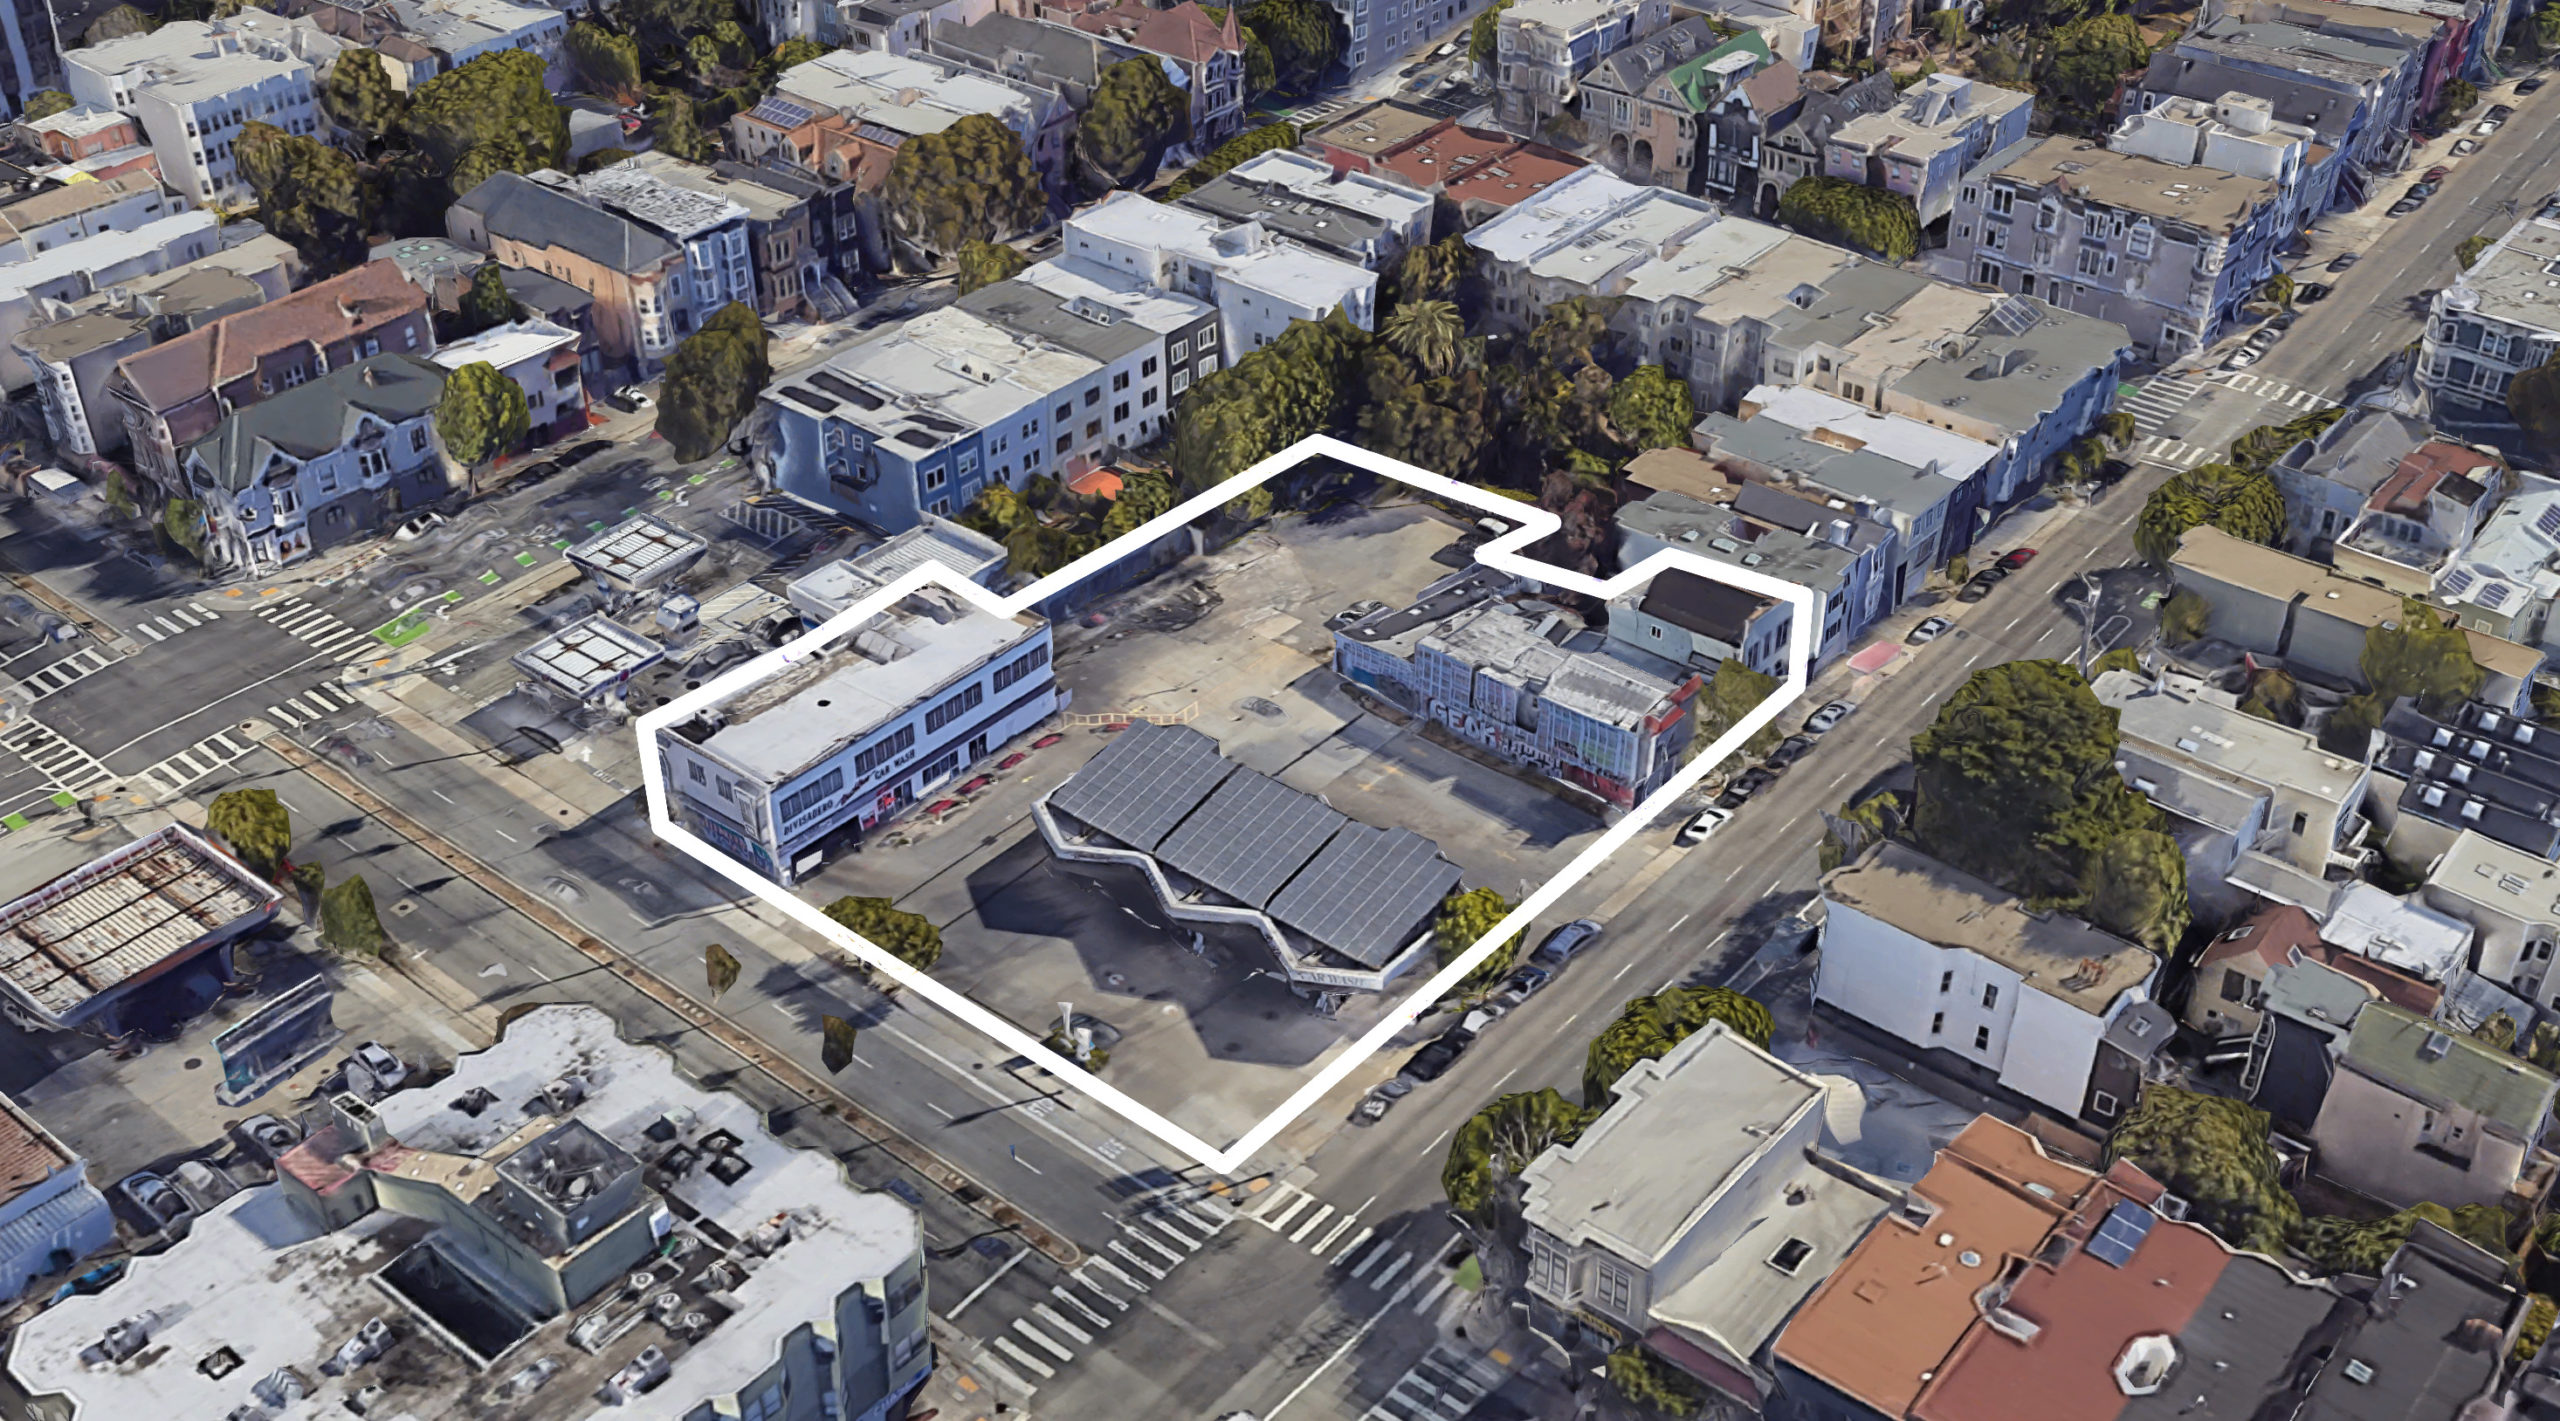 400 Divisadero Street aerial view, image via Google Satellite